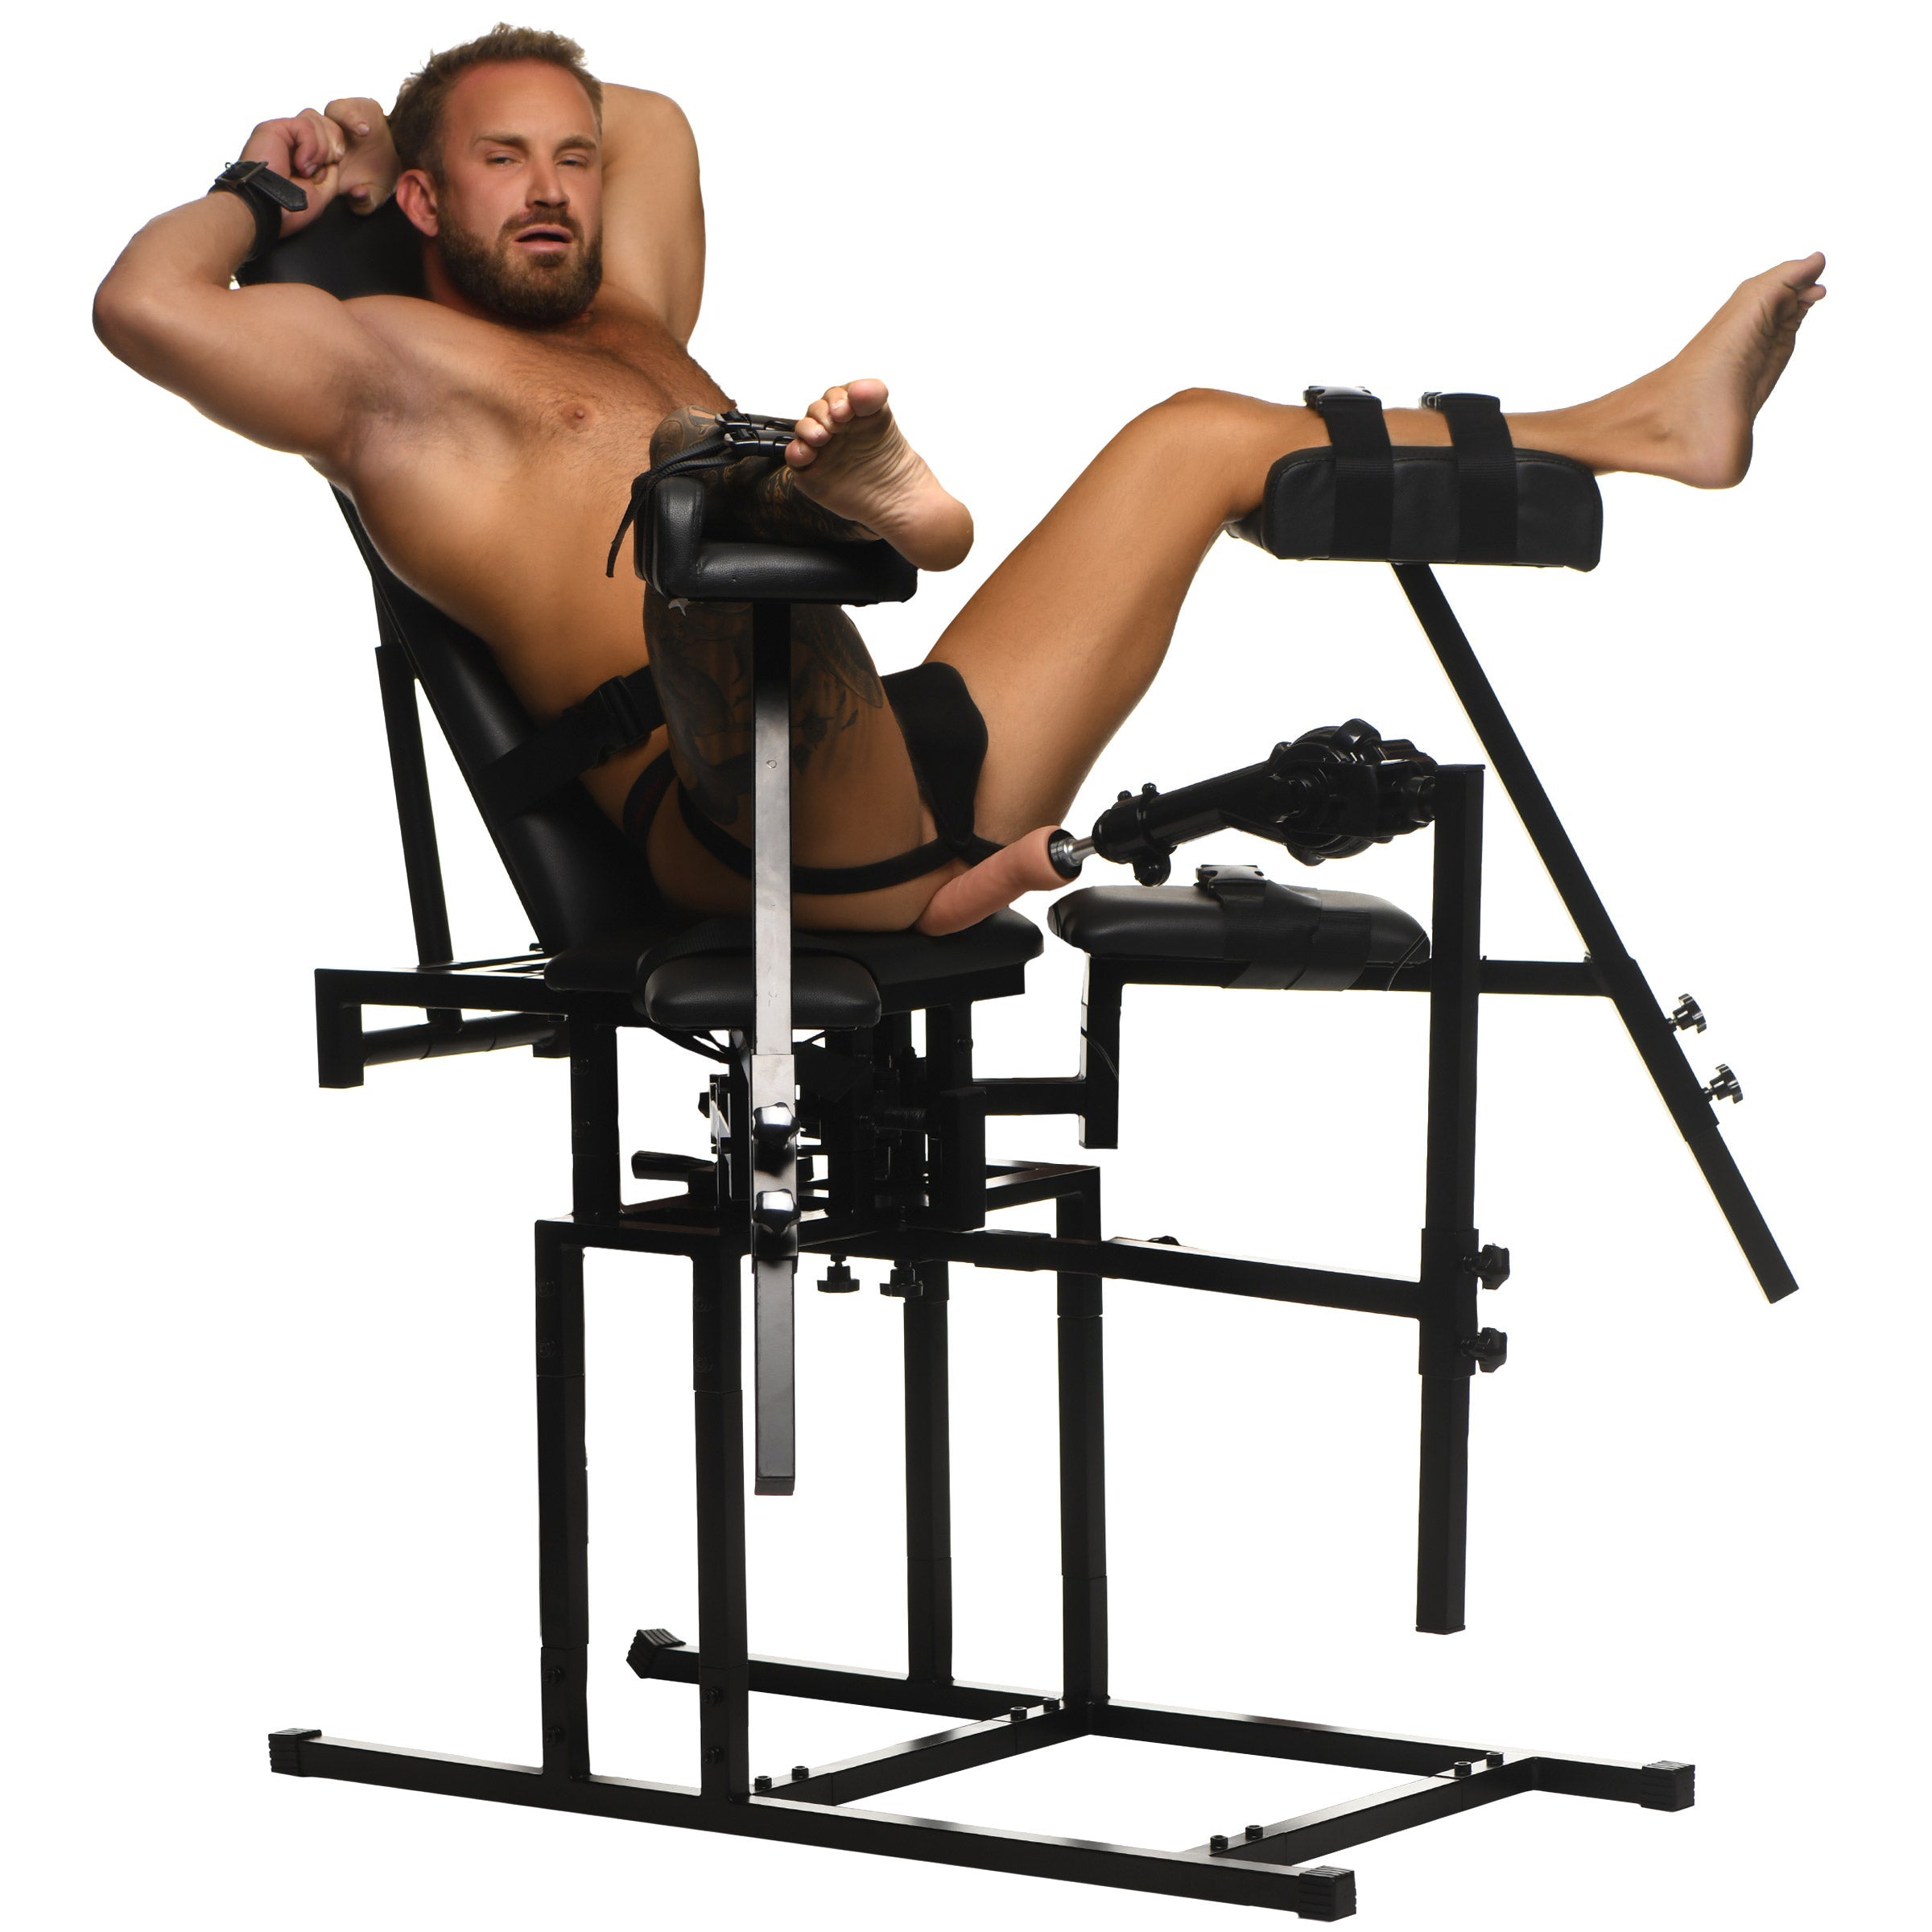 Leg Spreader Obedience Chair with Sex Machine